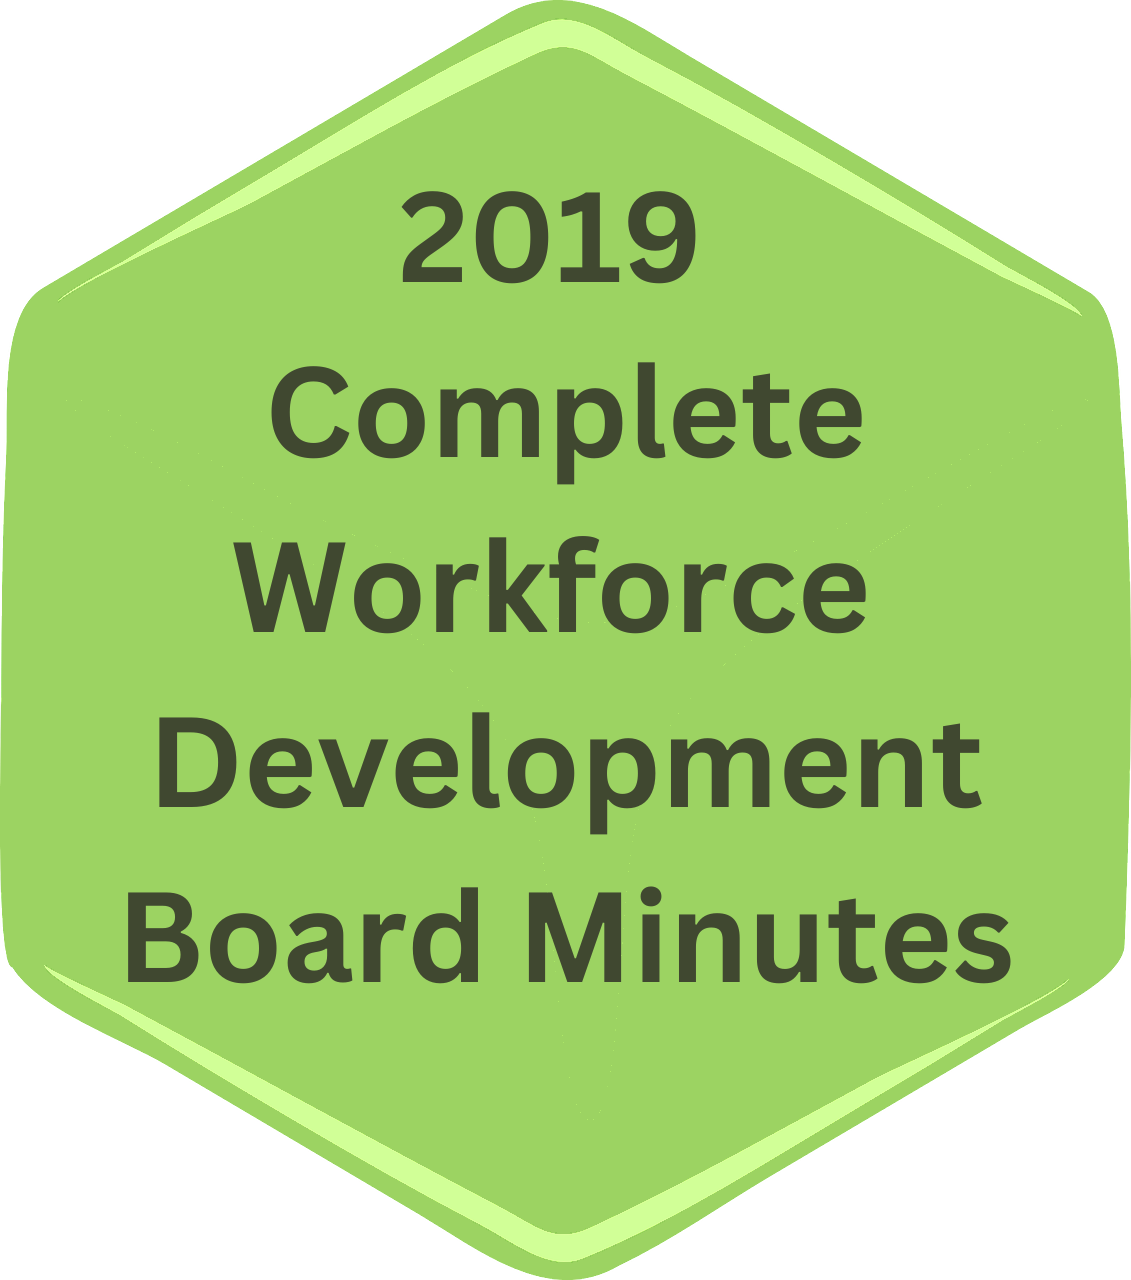 workforce development board meeting minutes complete 2019